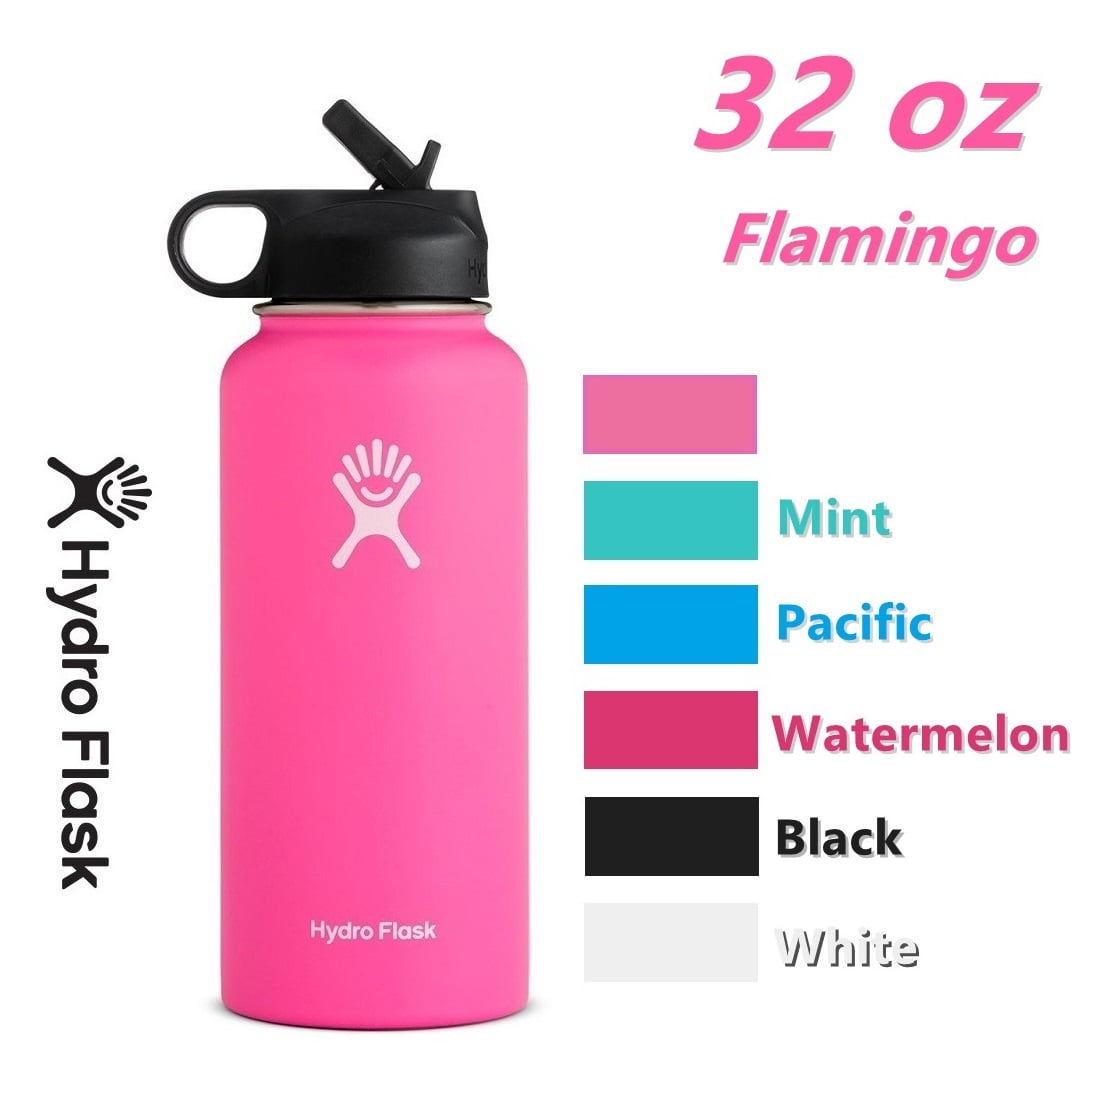 Black Double Wall Vacuum Insulated Stainless Steel Water Bottle Tumbler Travel Mug Flamingo 32 oz 